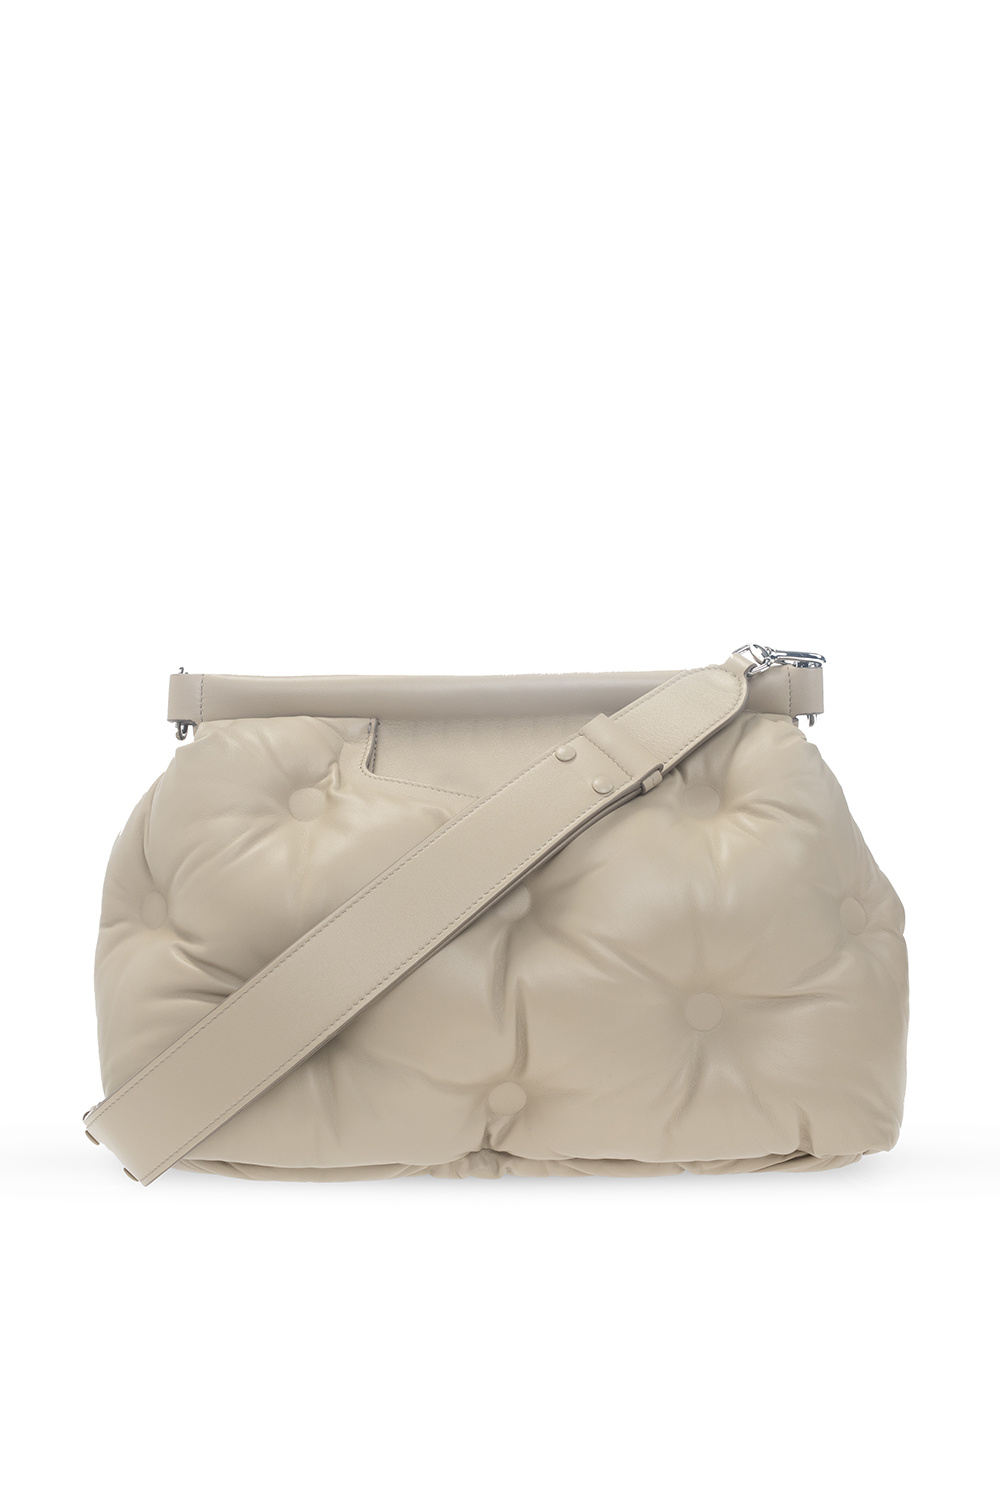 Totes bags Maison Margiela - Medium Glam Slam bag in grey